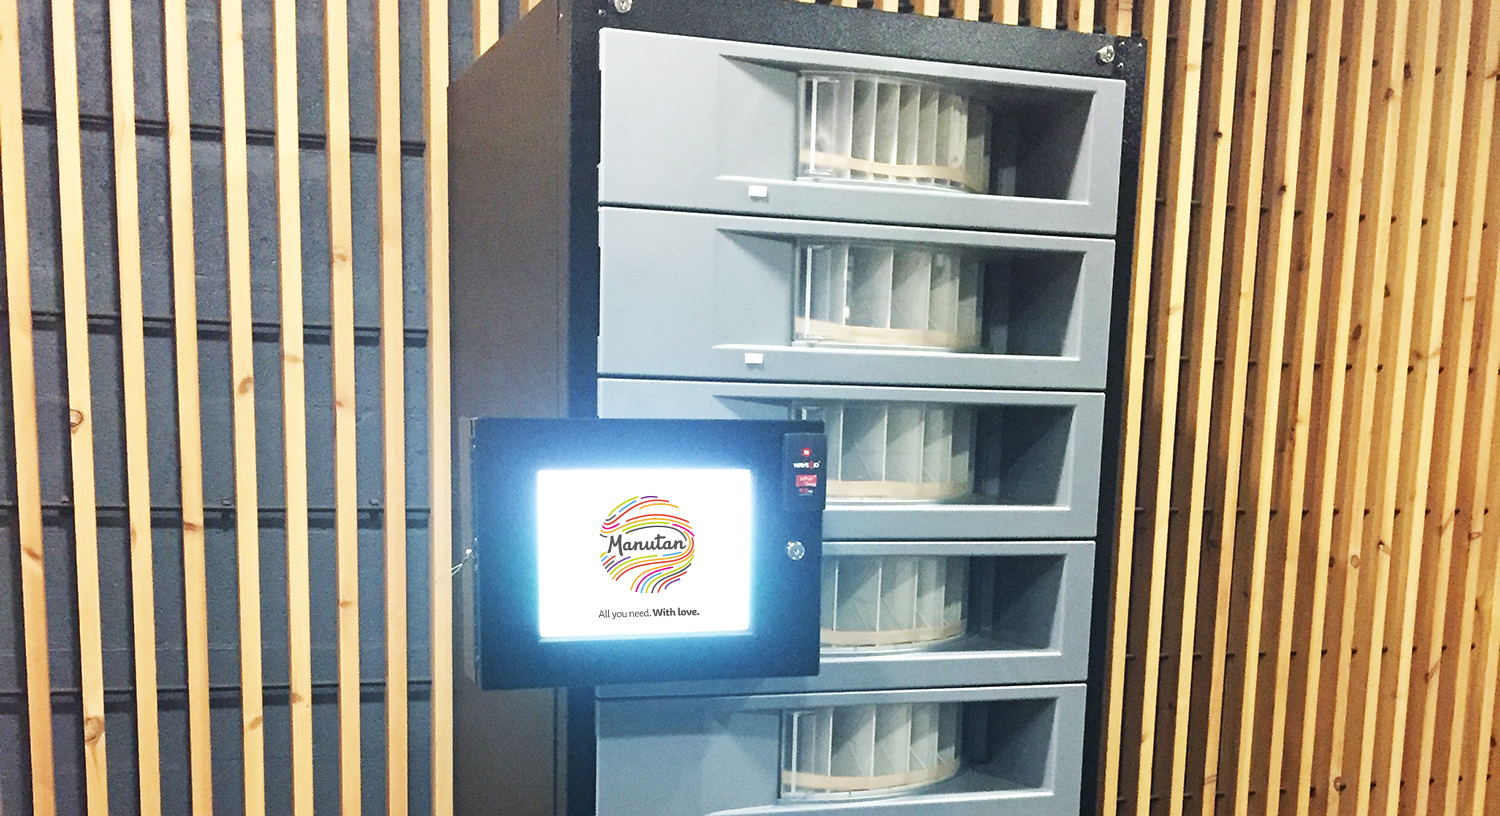 vending machine in construction site